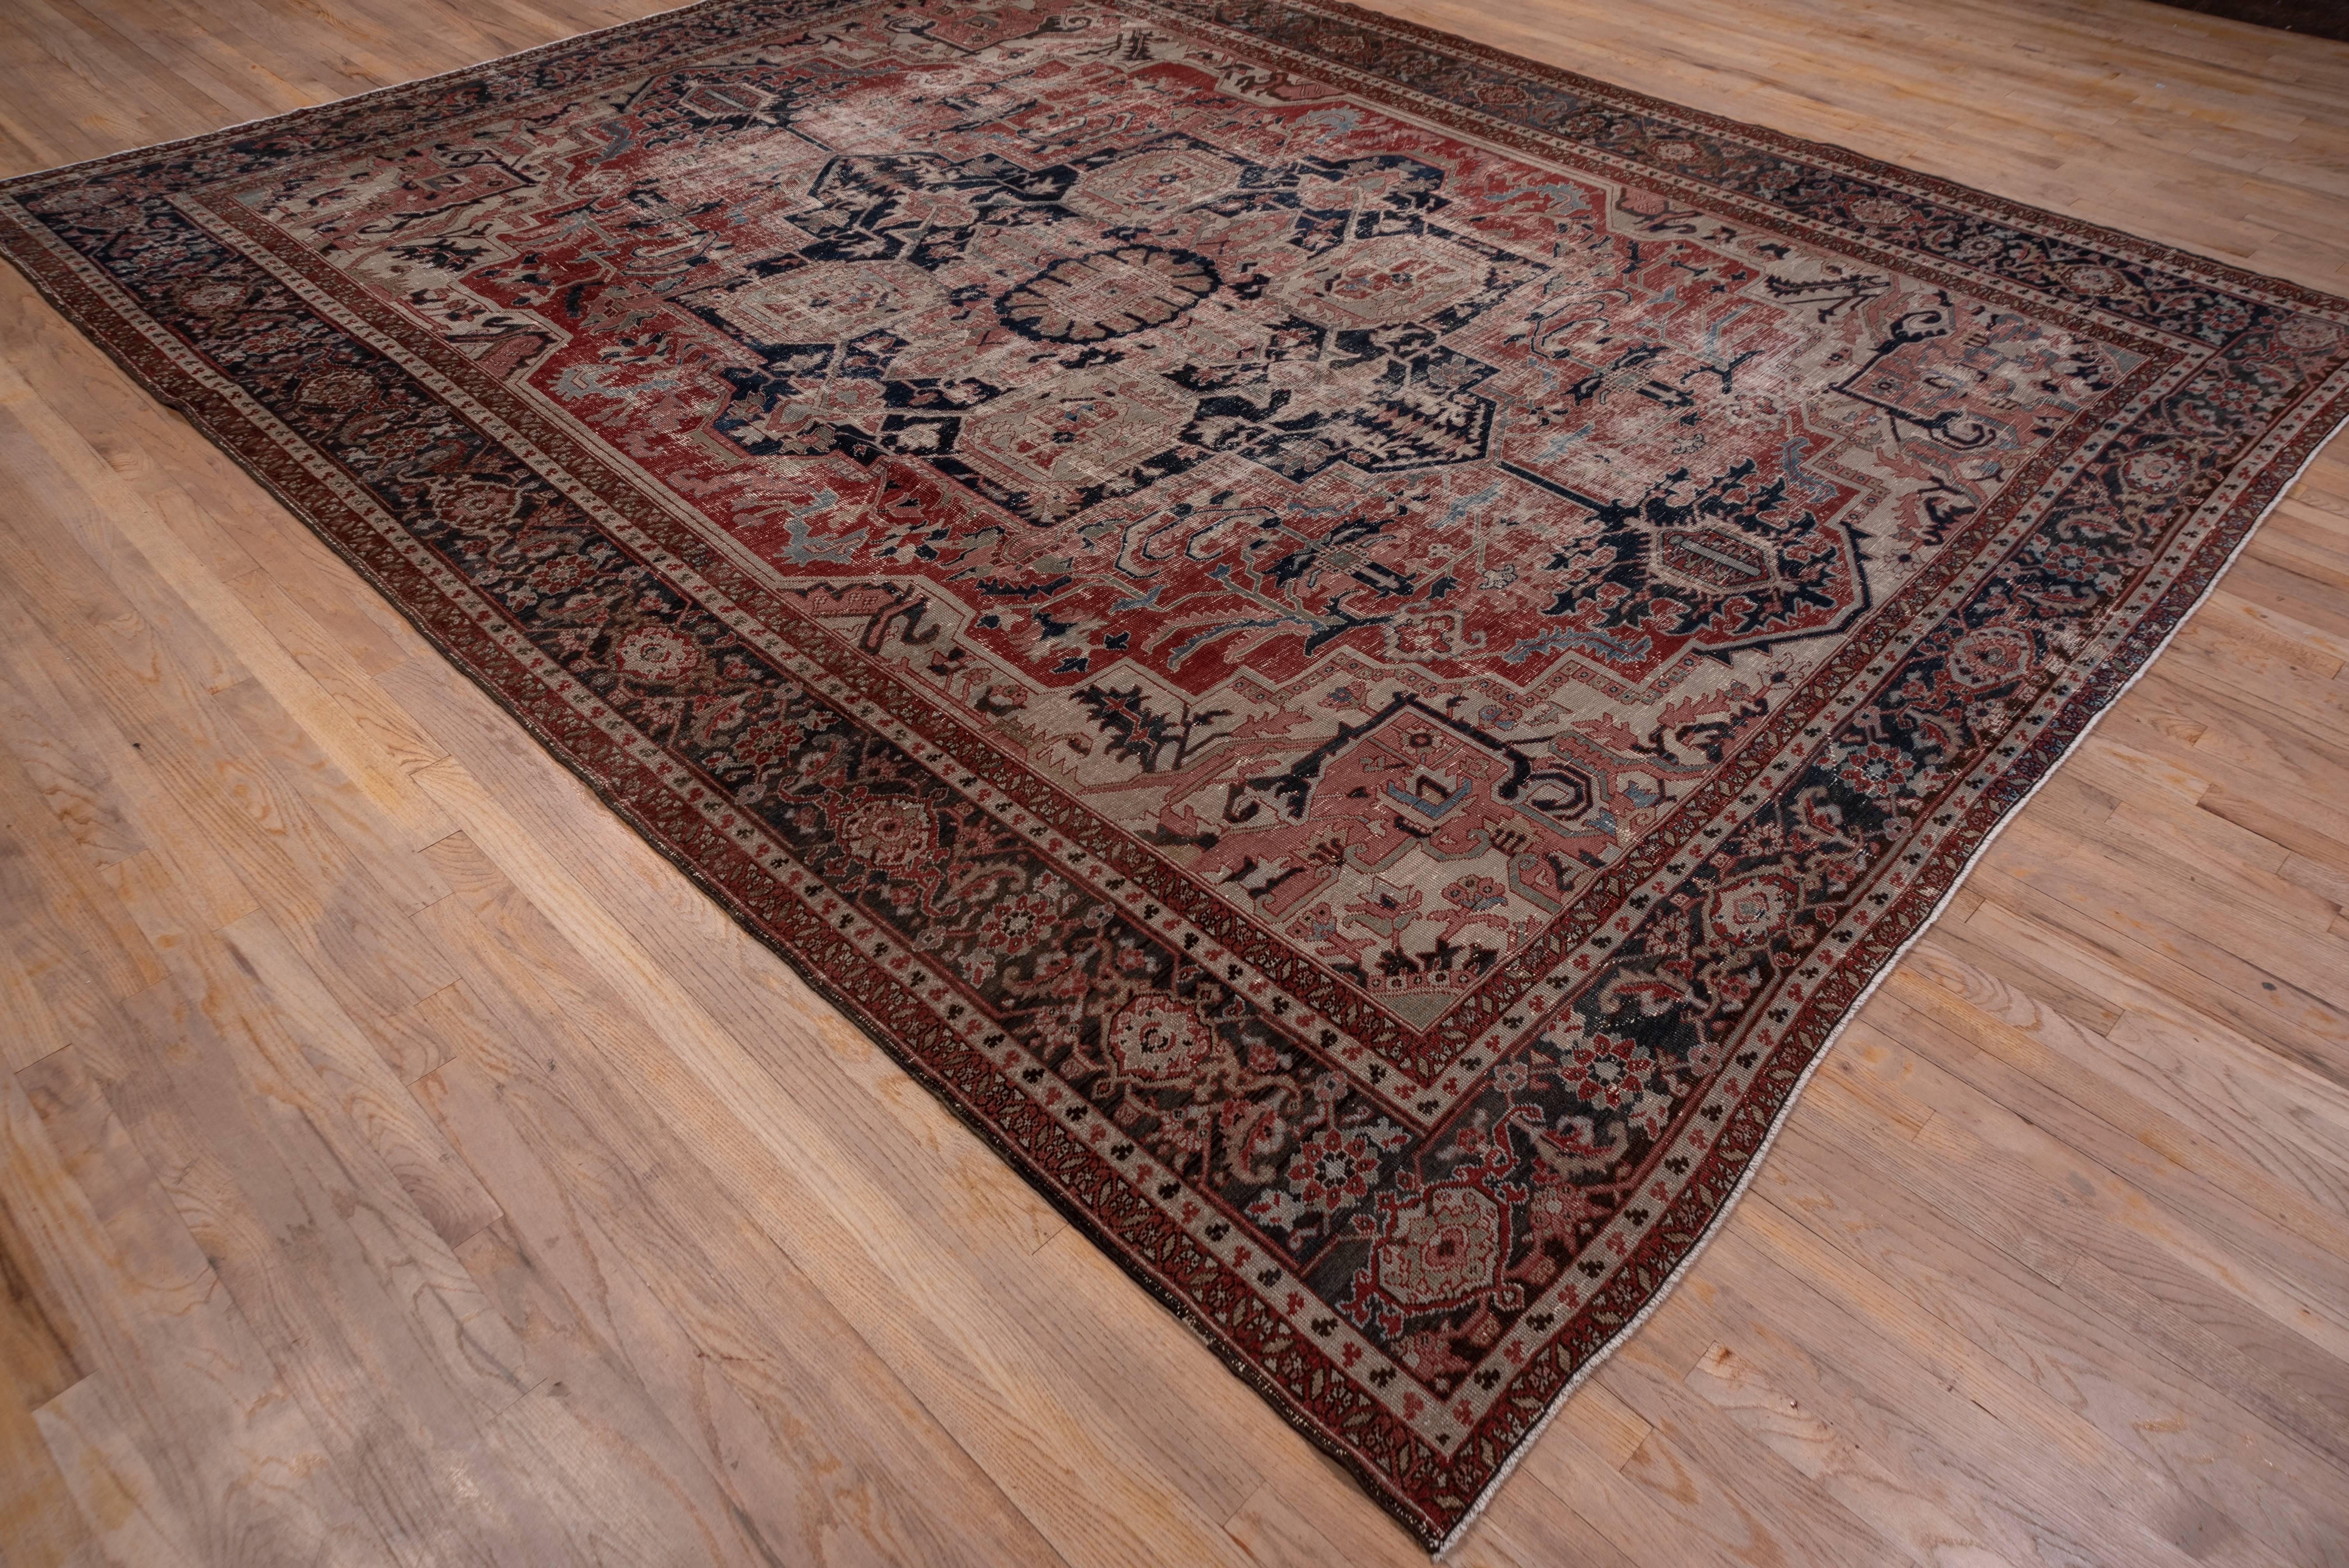 Antique Persian Heriz Carpet, Shabby Chic 2